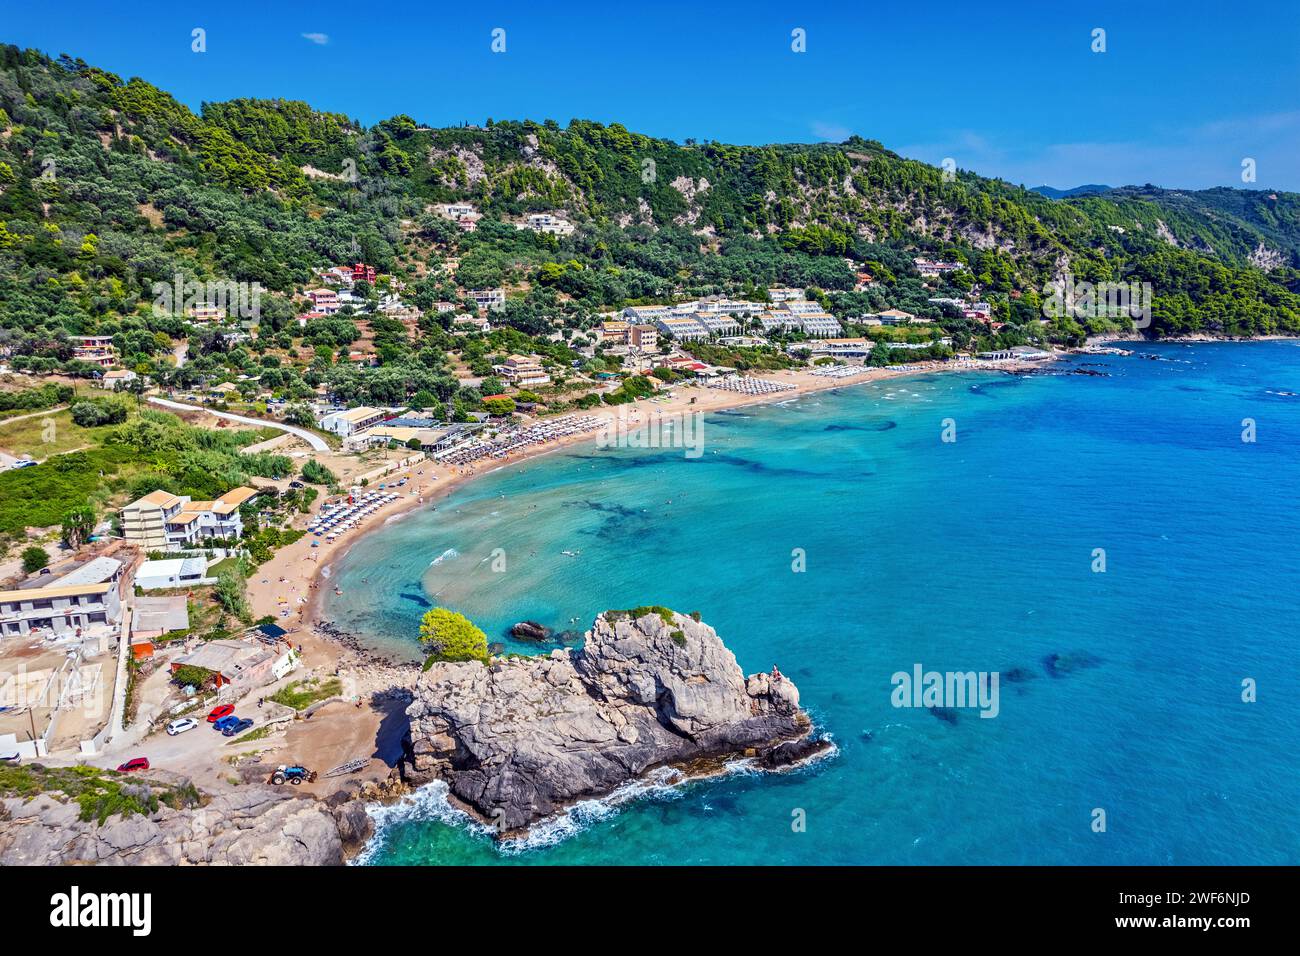 Aerial view of Kontogialos beach, Corfu island, Ionian Sea, Greece. Stock Photo